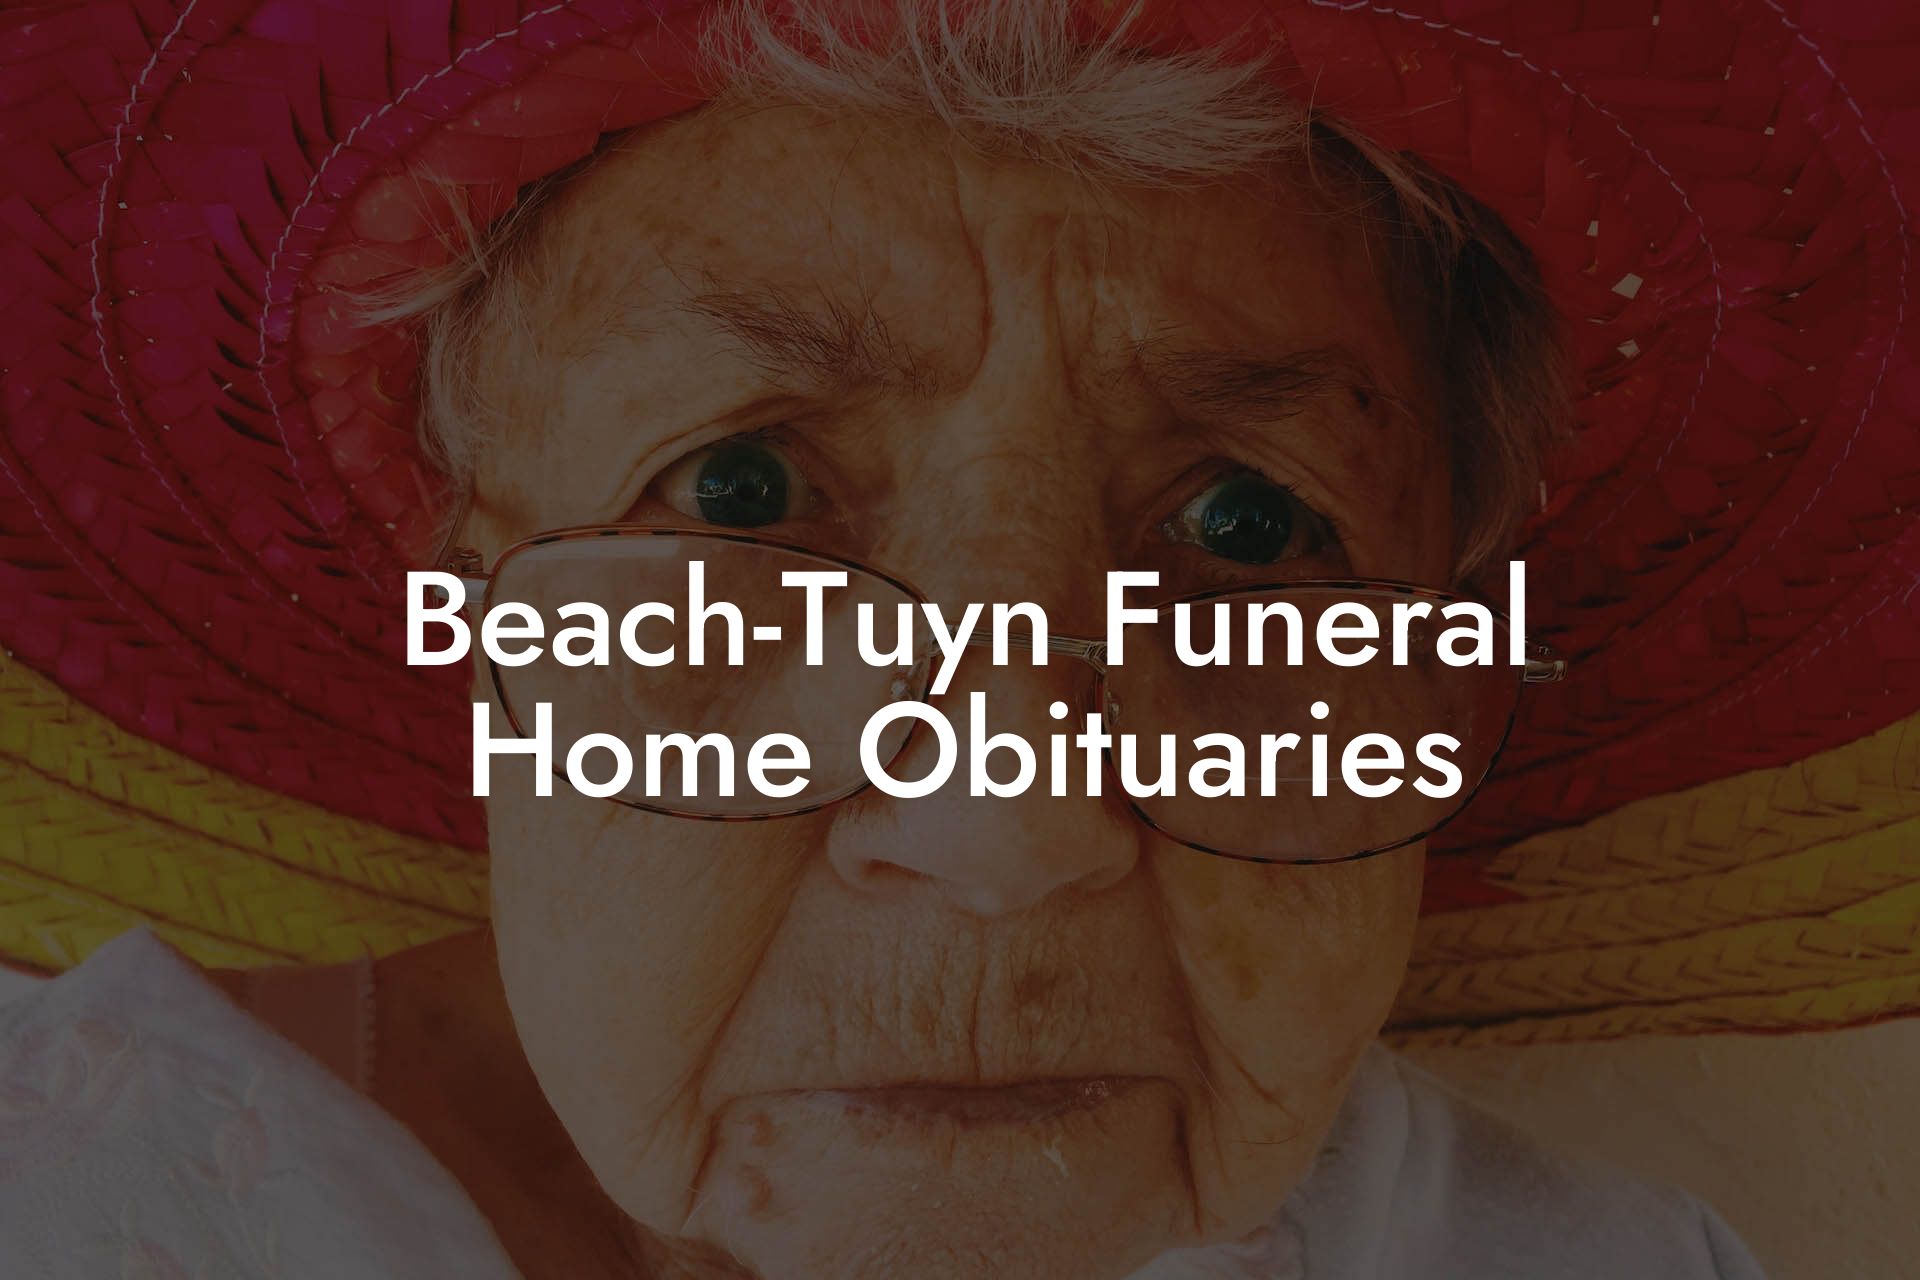 Beach-Tuyn Funeral Home Obituaries